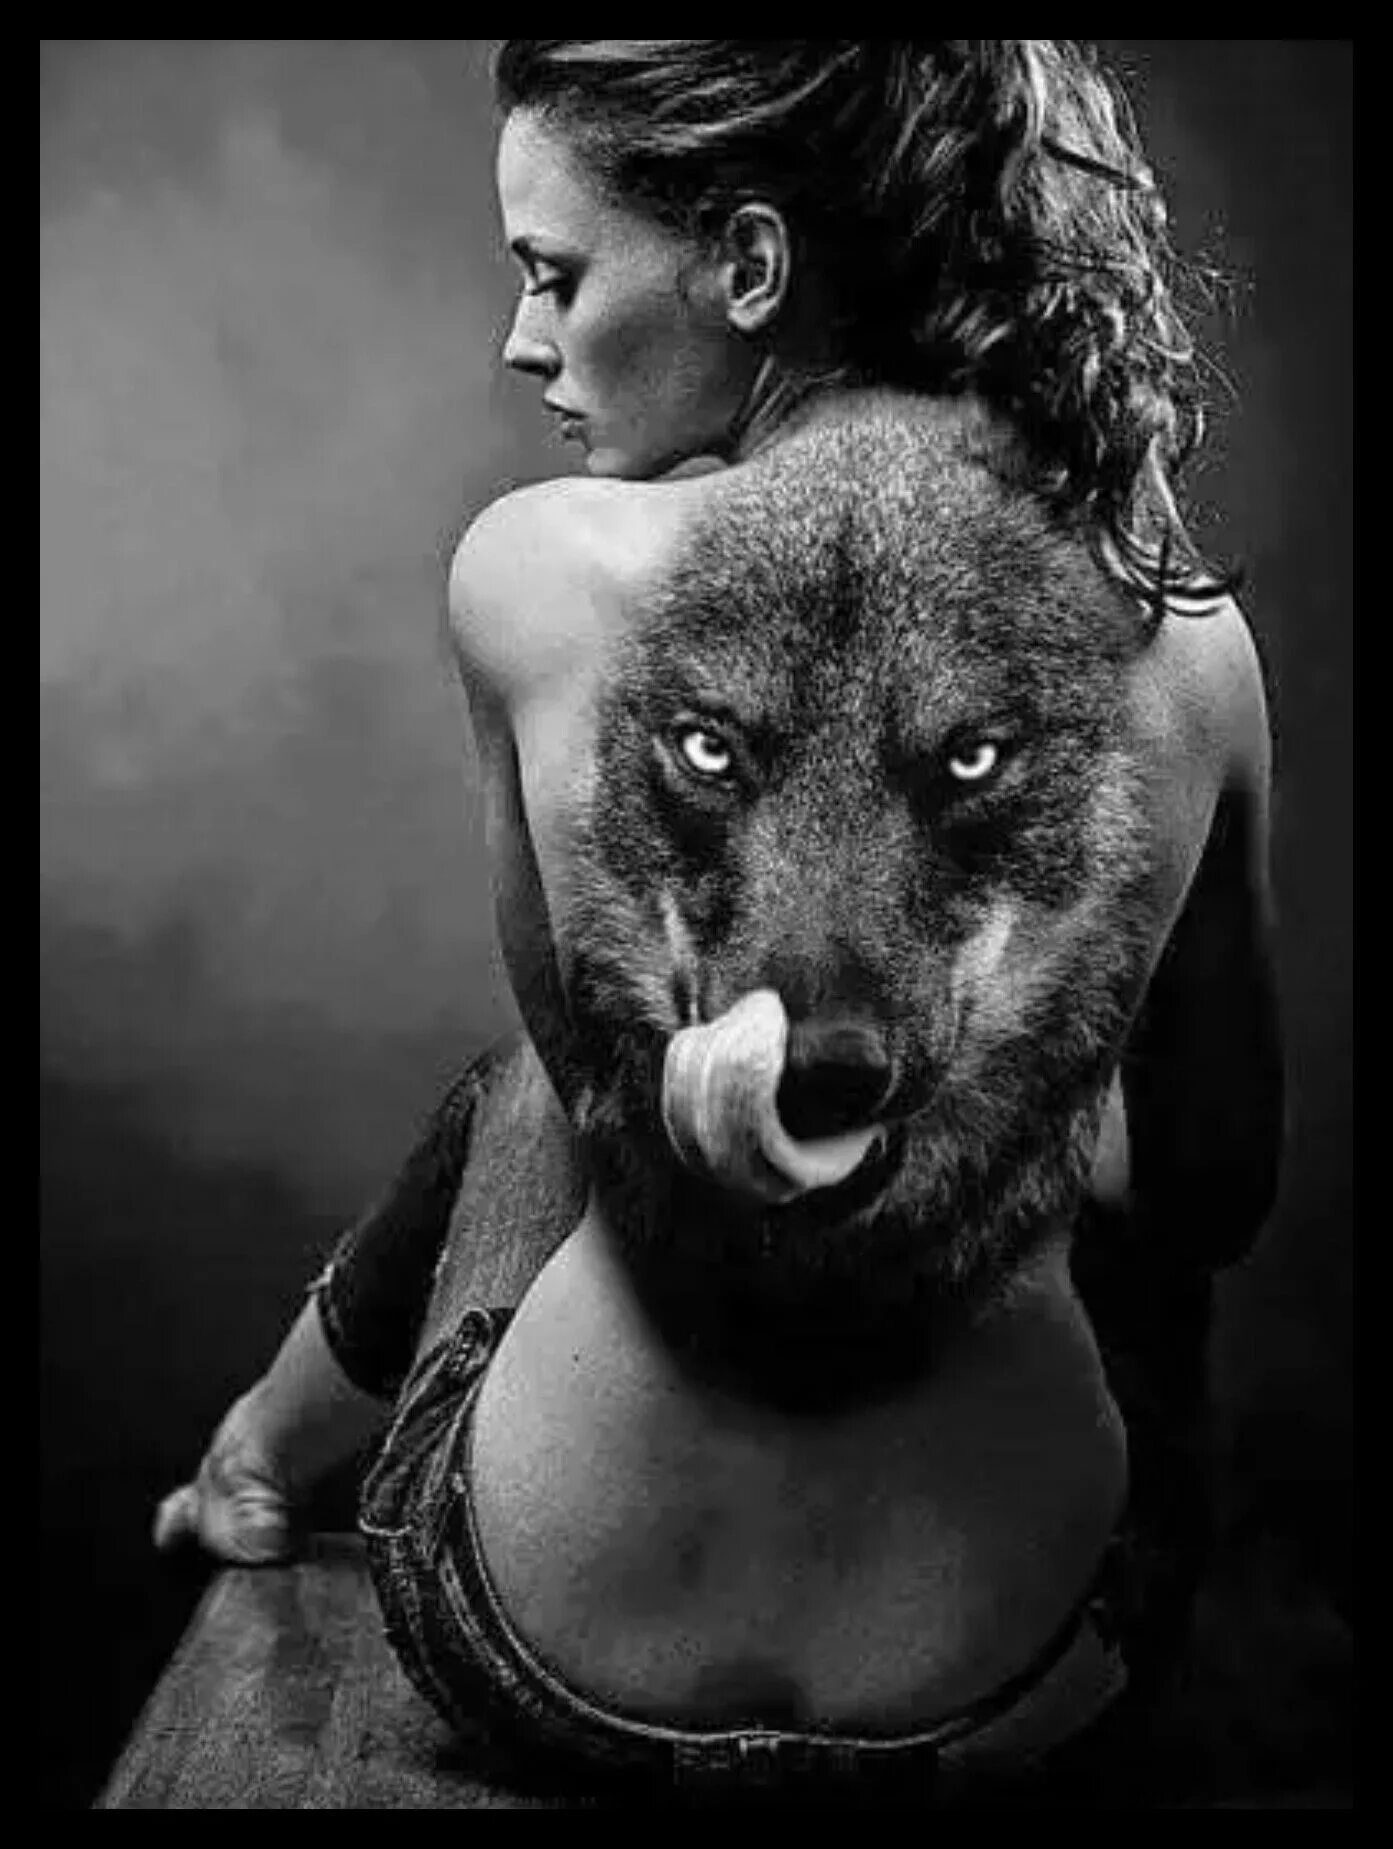 Woman with animals. Кейт Мосс взгляд волчицы. Девушка с волком. Волчица и девушка. Красивая девушка с волком.